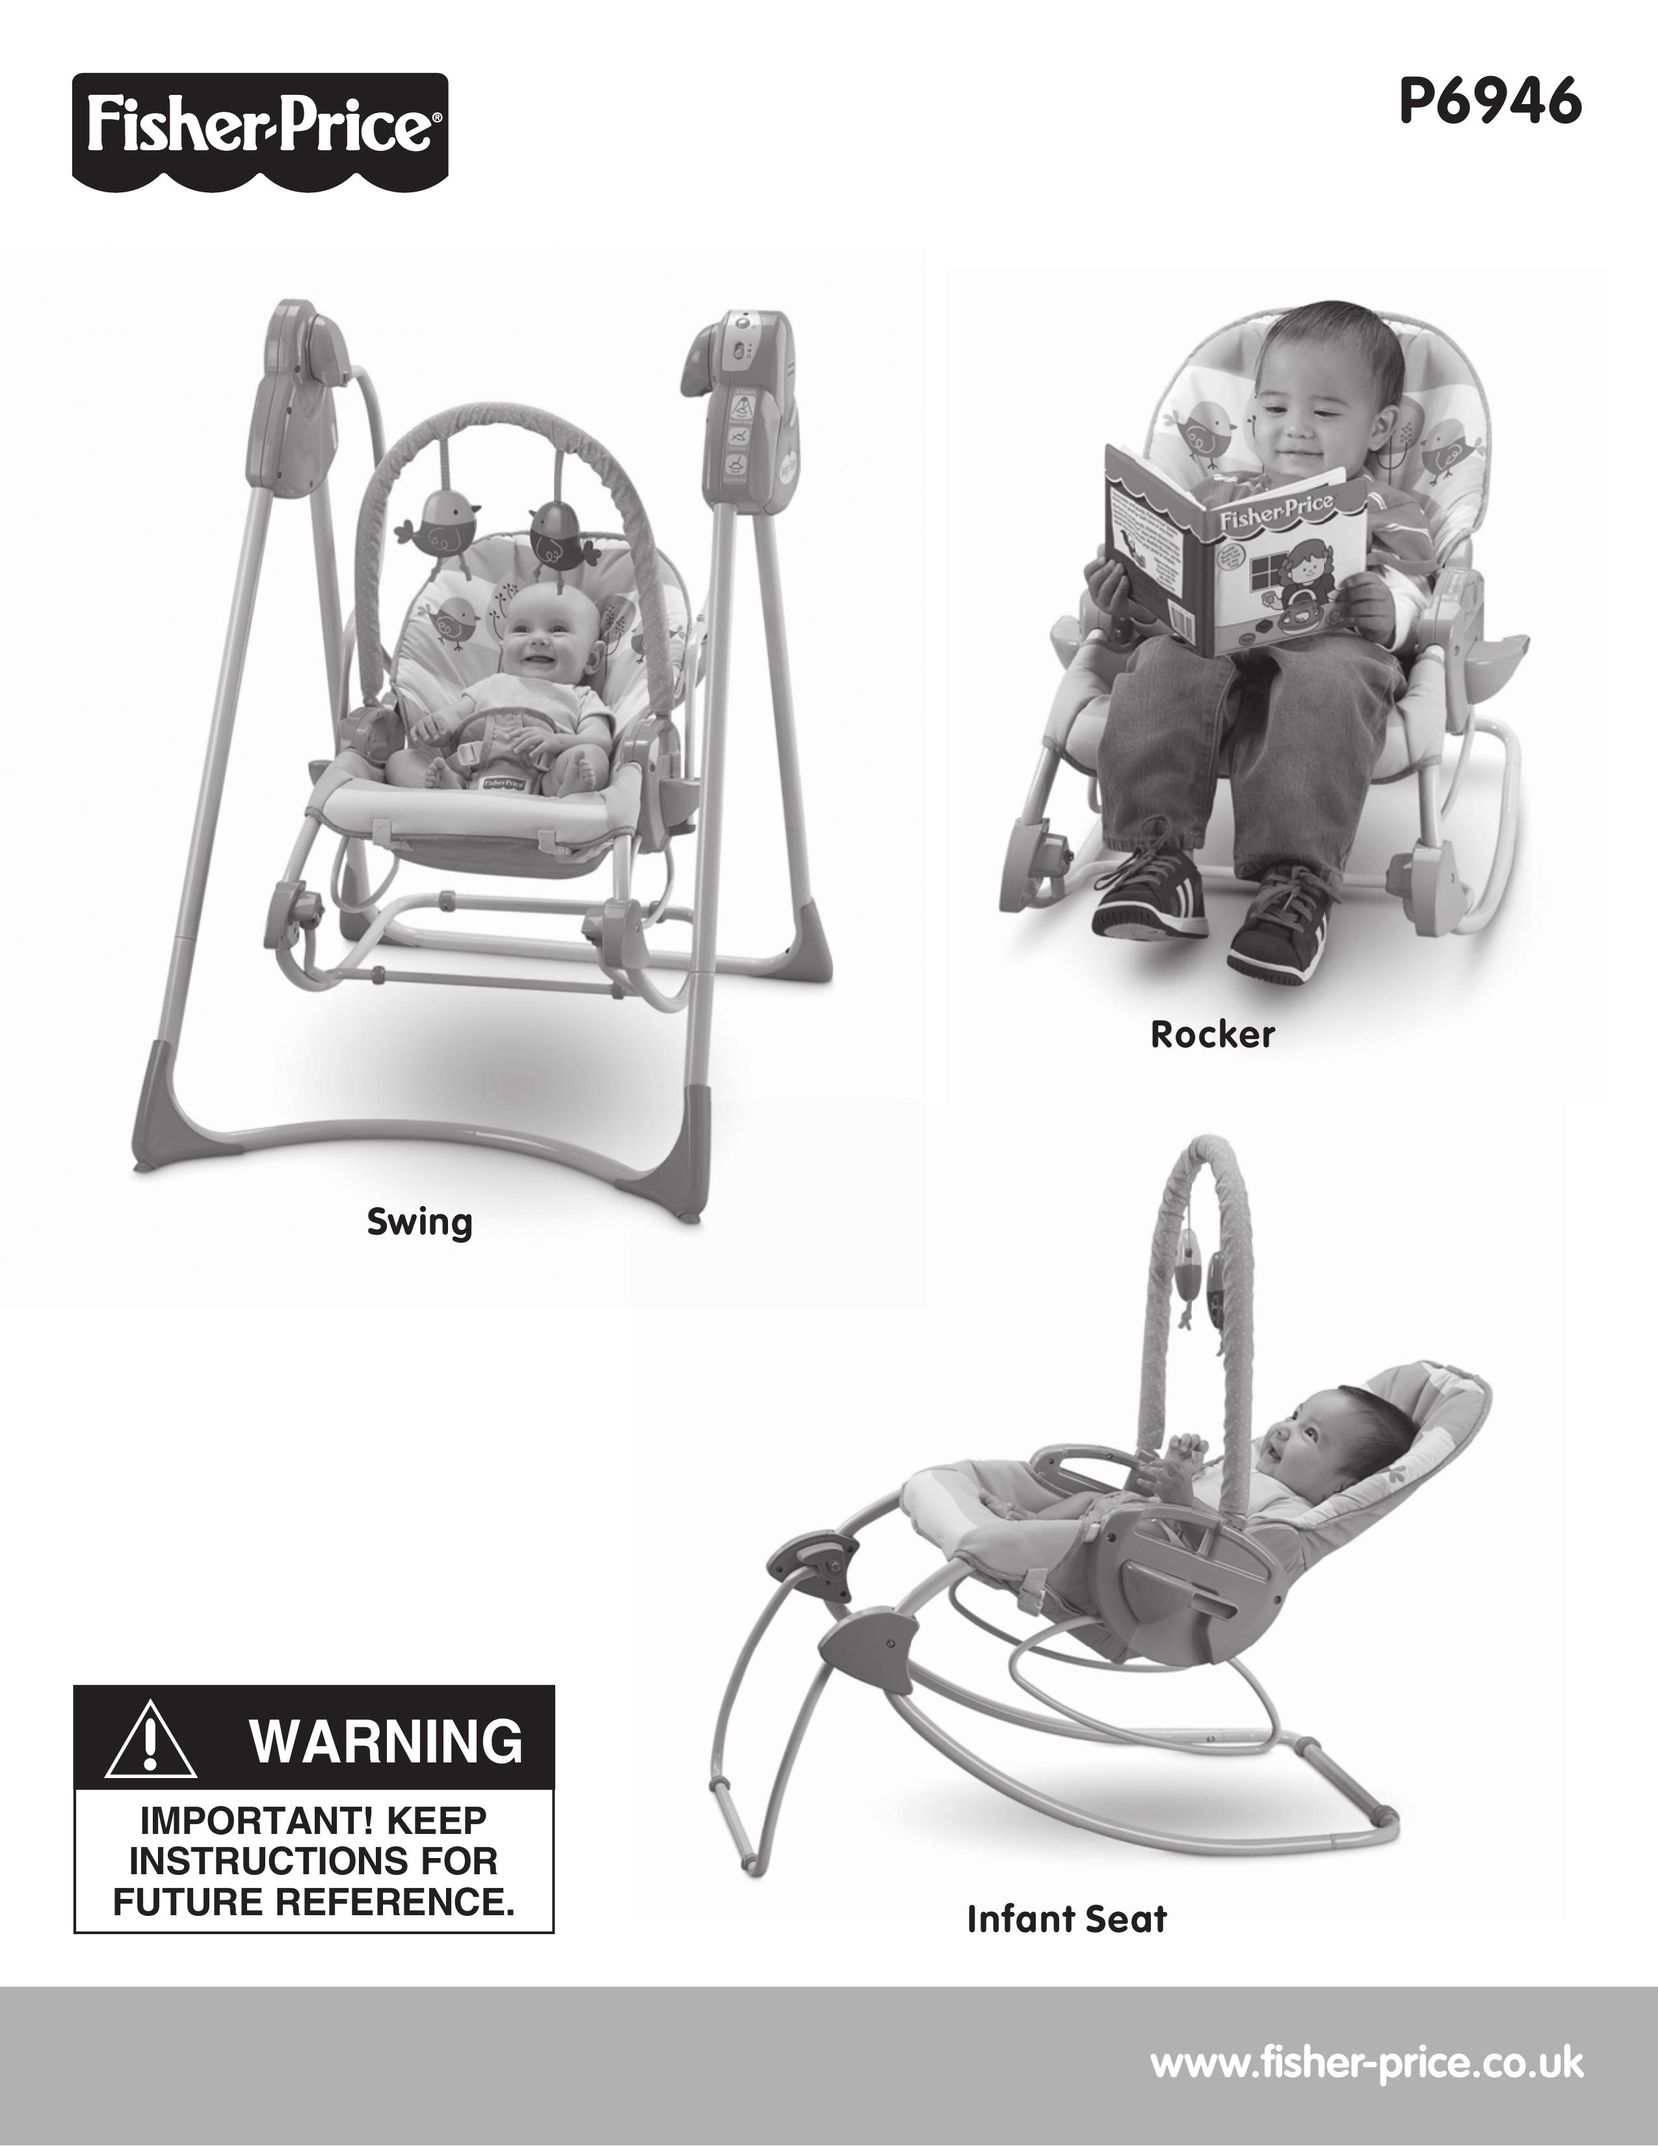 Fisher-Price P6946 Baby Swing User Manual